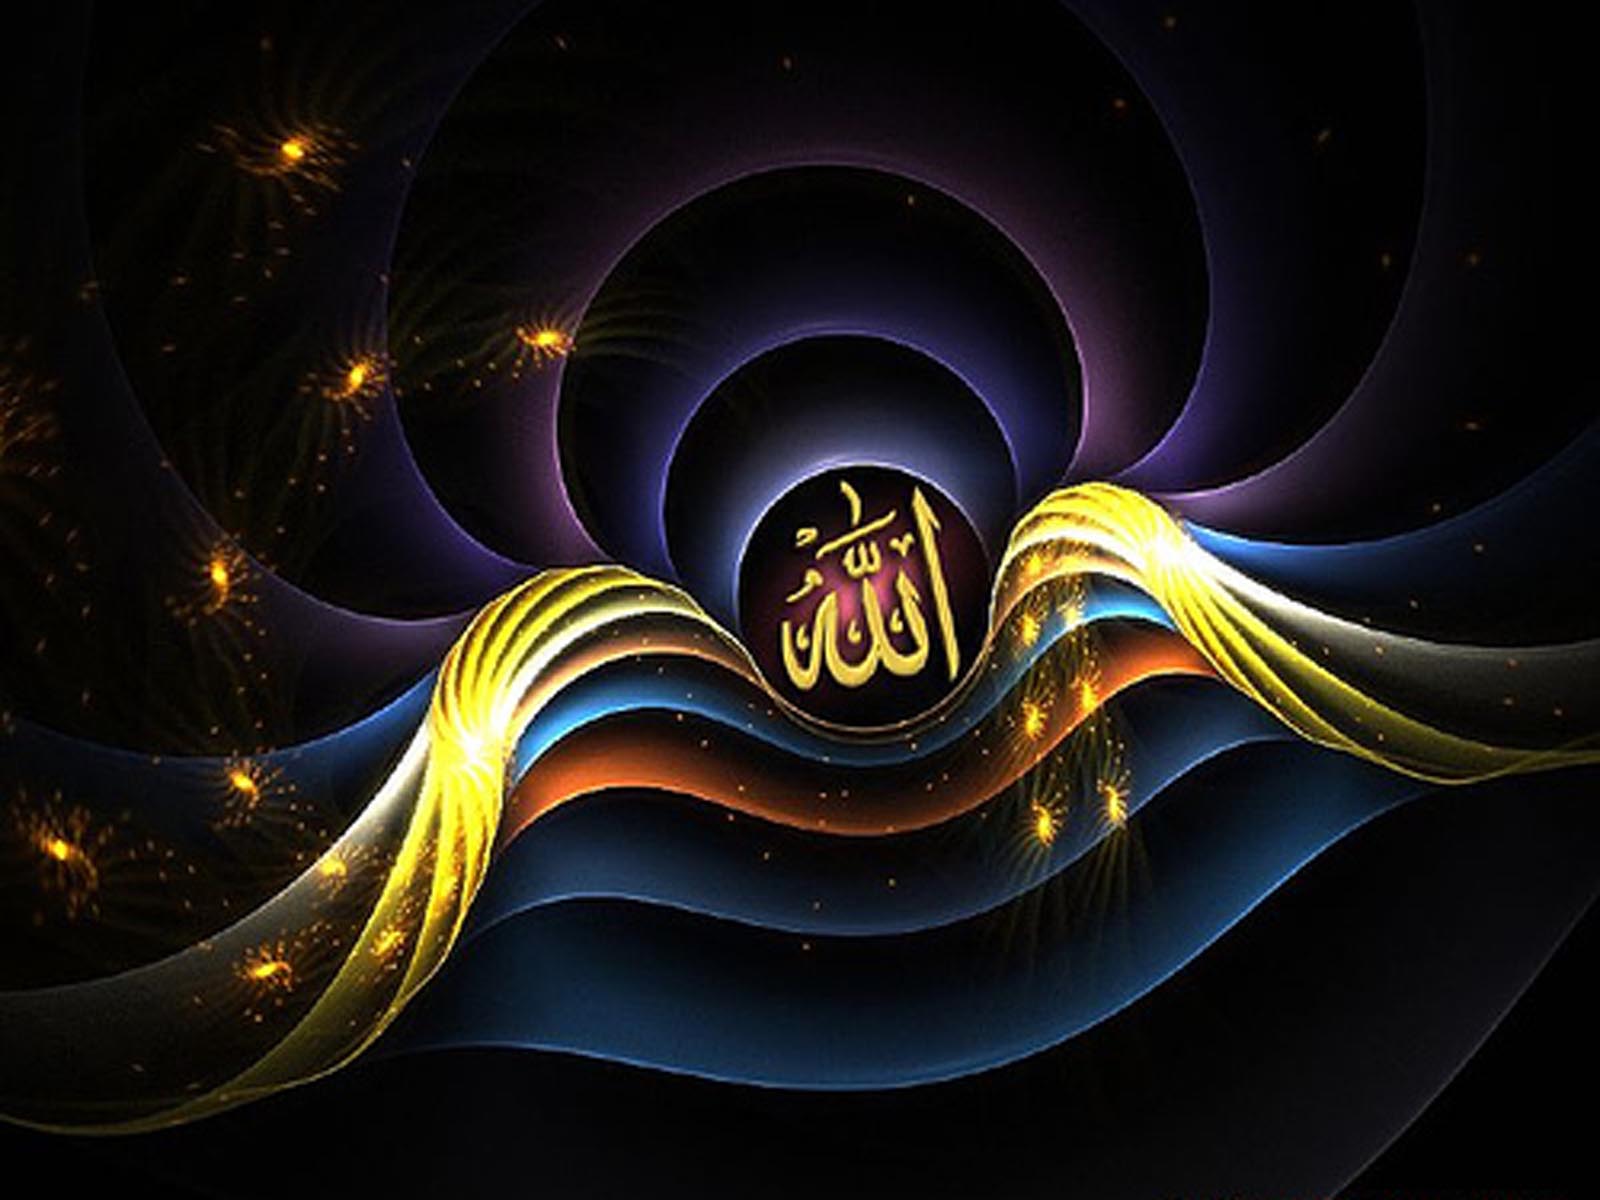 Ewallpaperhub provide the latest Allah Symbol Wallpaper. You can